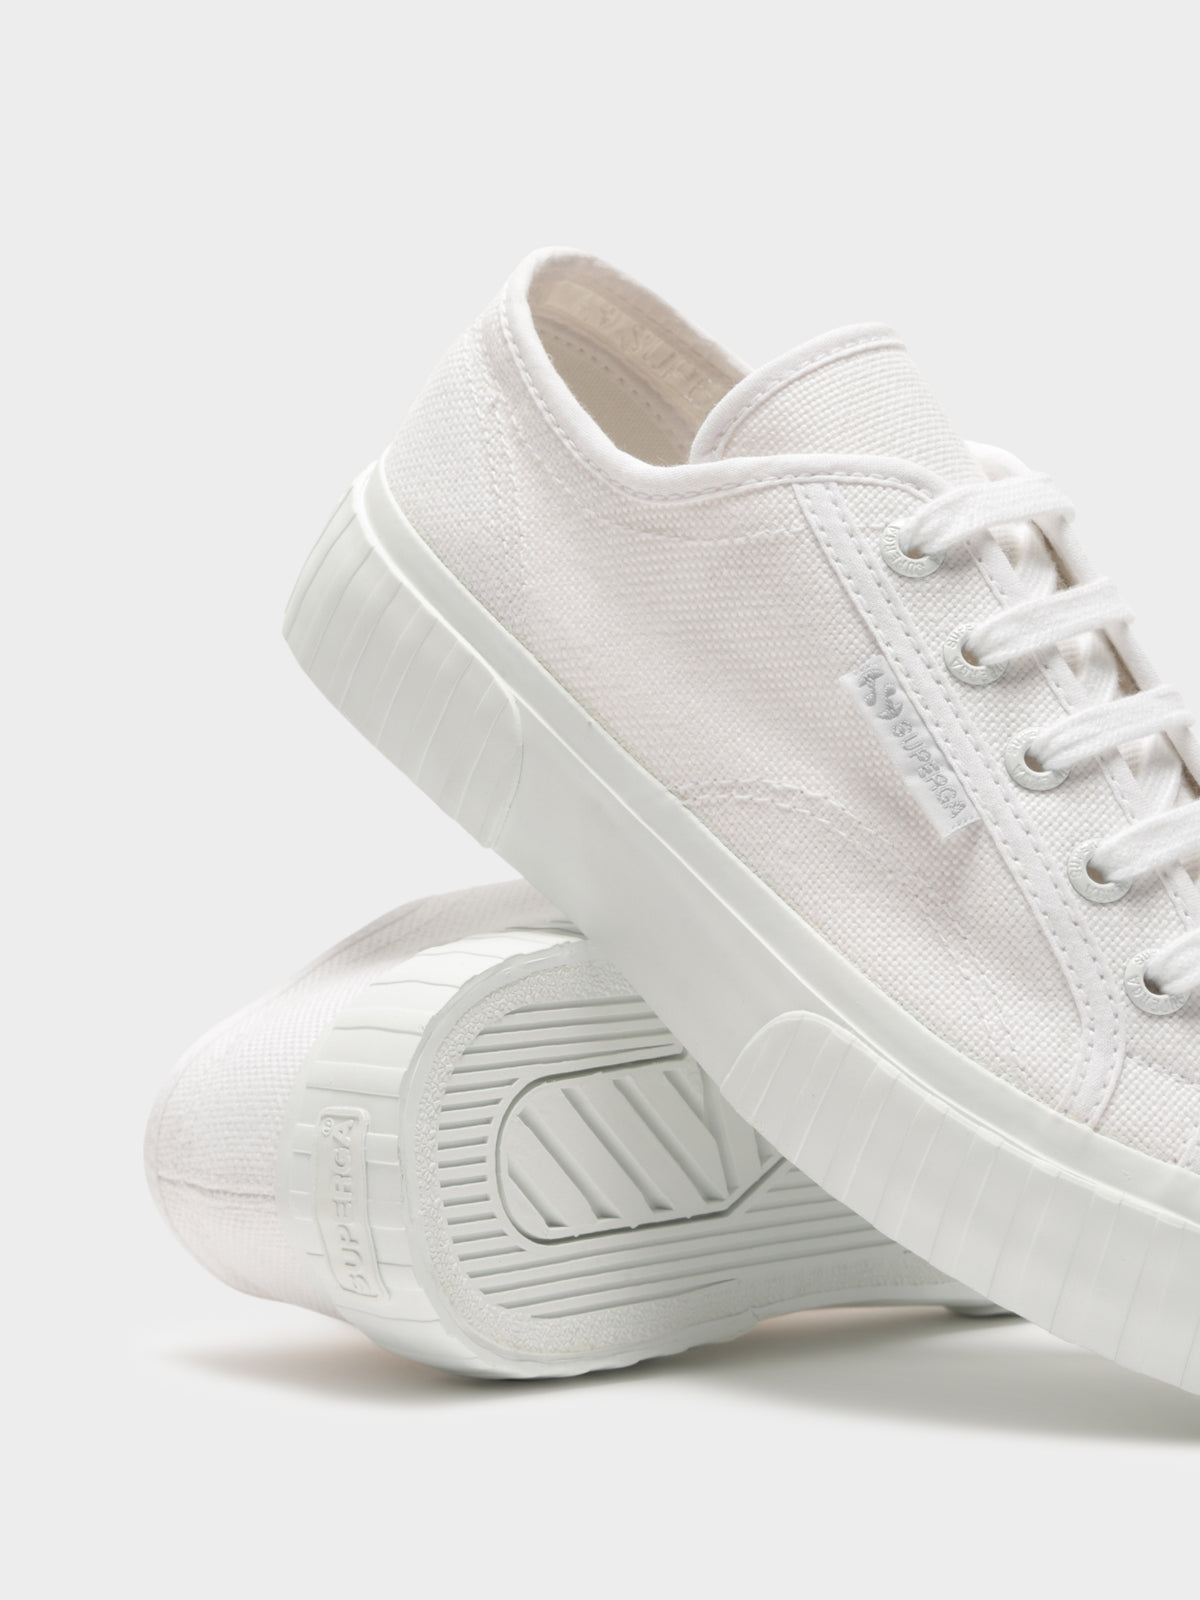 2630 Cotu Sneakers in White